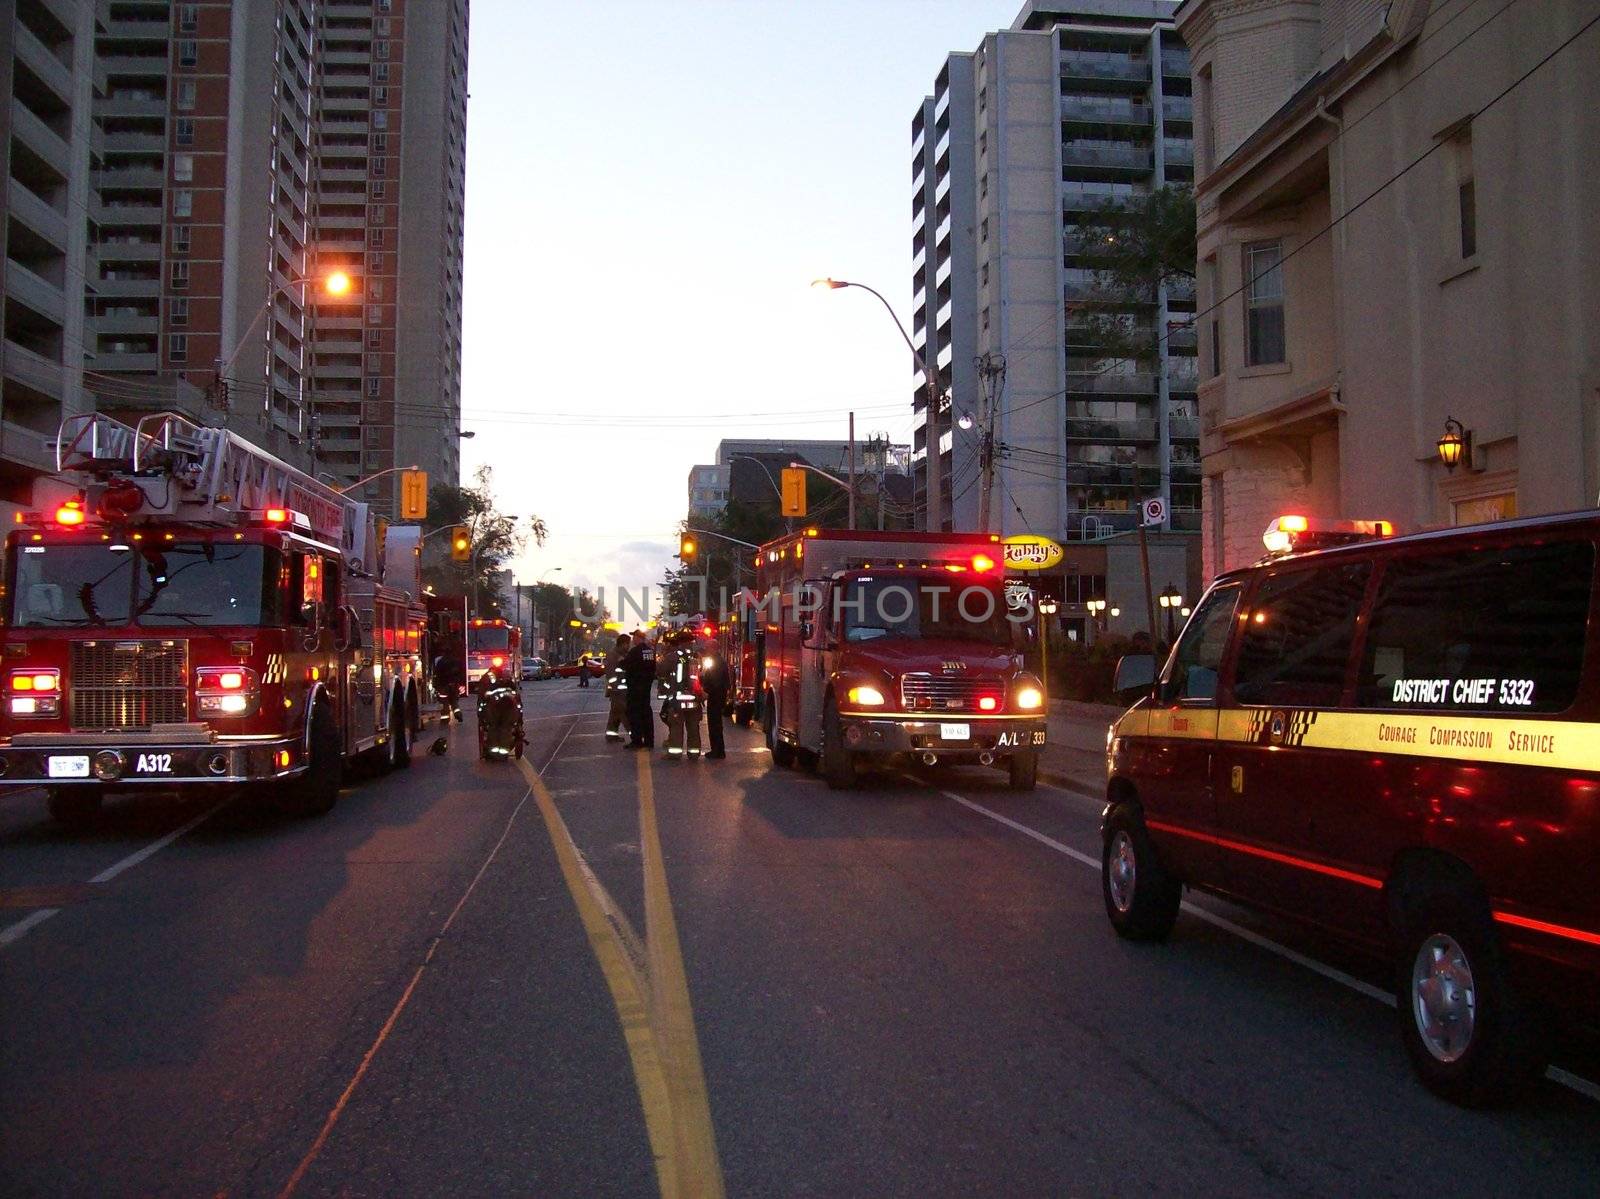 Fire Trucks On The Scene